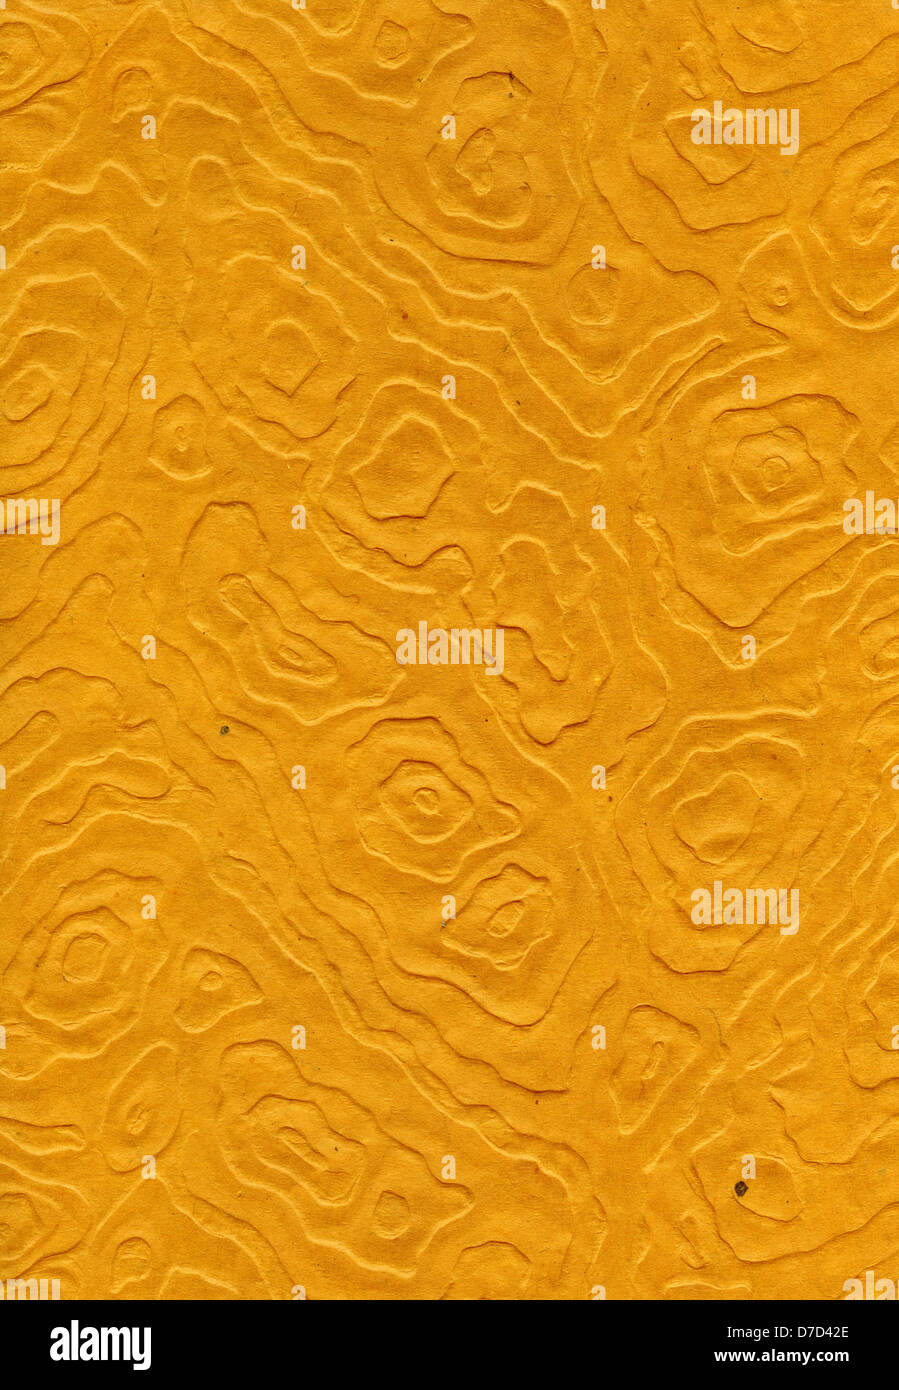 High resolution scan orange rice paper decorative pattern made amorphic mandalas. Scanned at 1200dpi using professional Epson Stock Photo